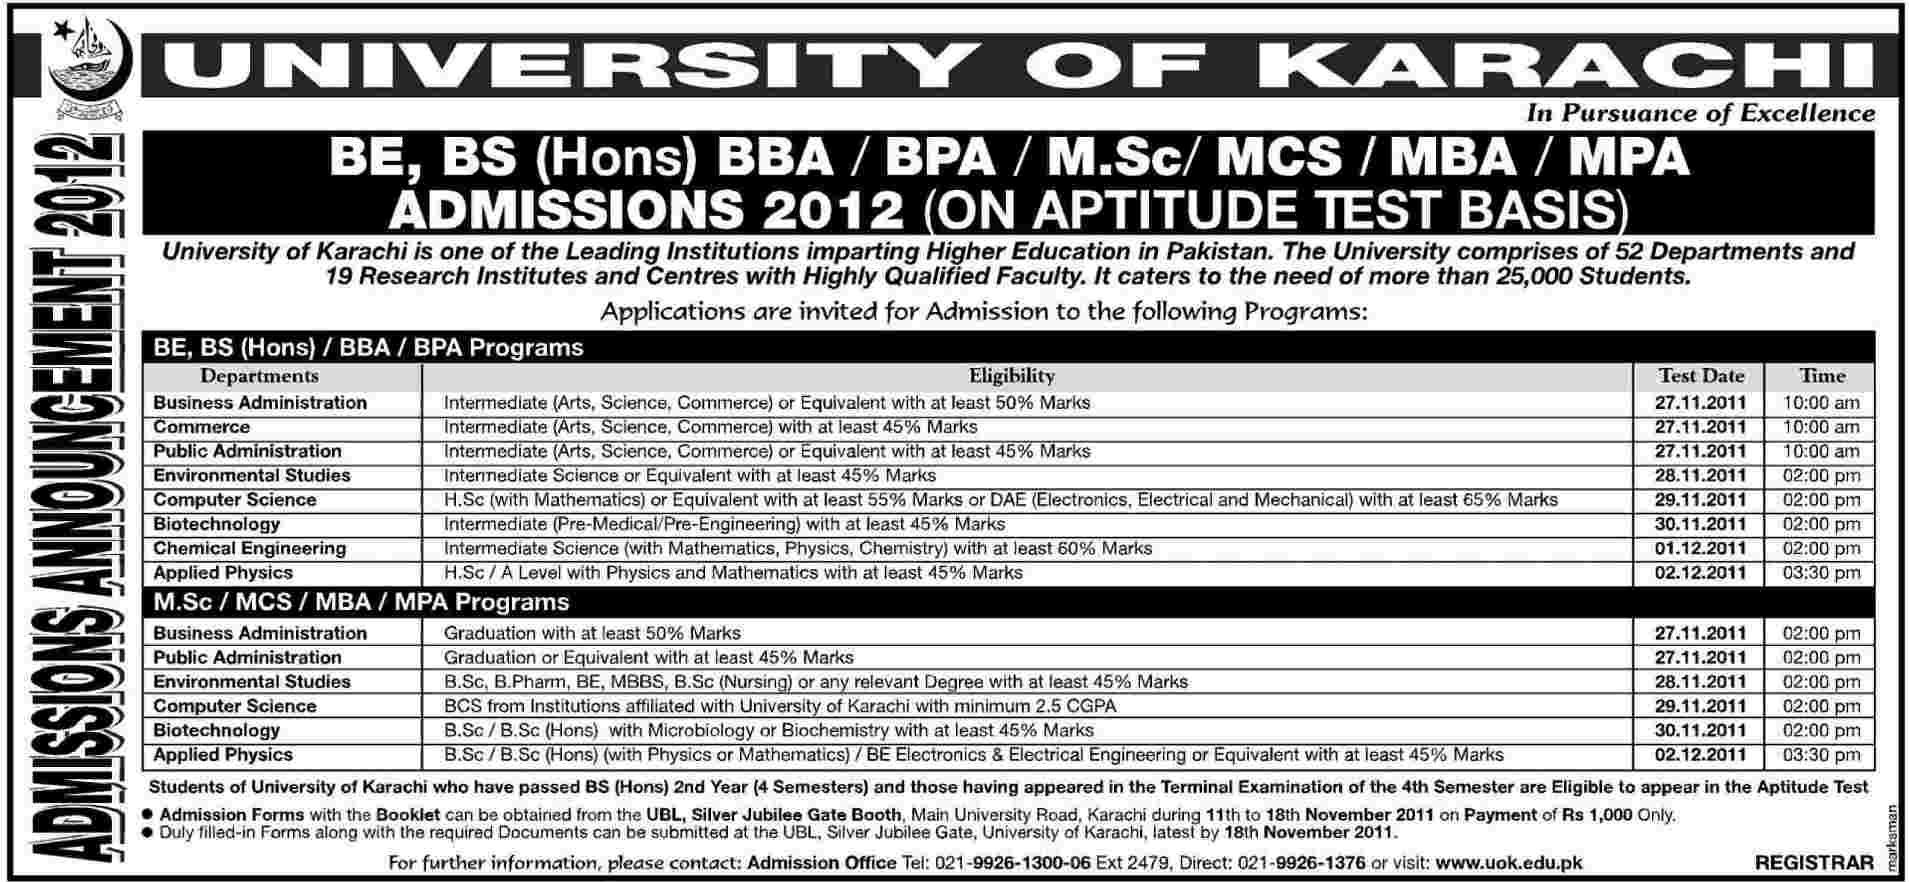 University Of Karachi Announces B E BS Hons BBA BPA M Sc MCS MBA MPA Admissions 2012